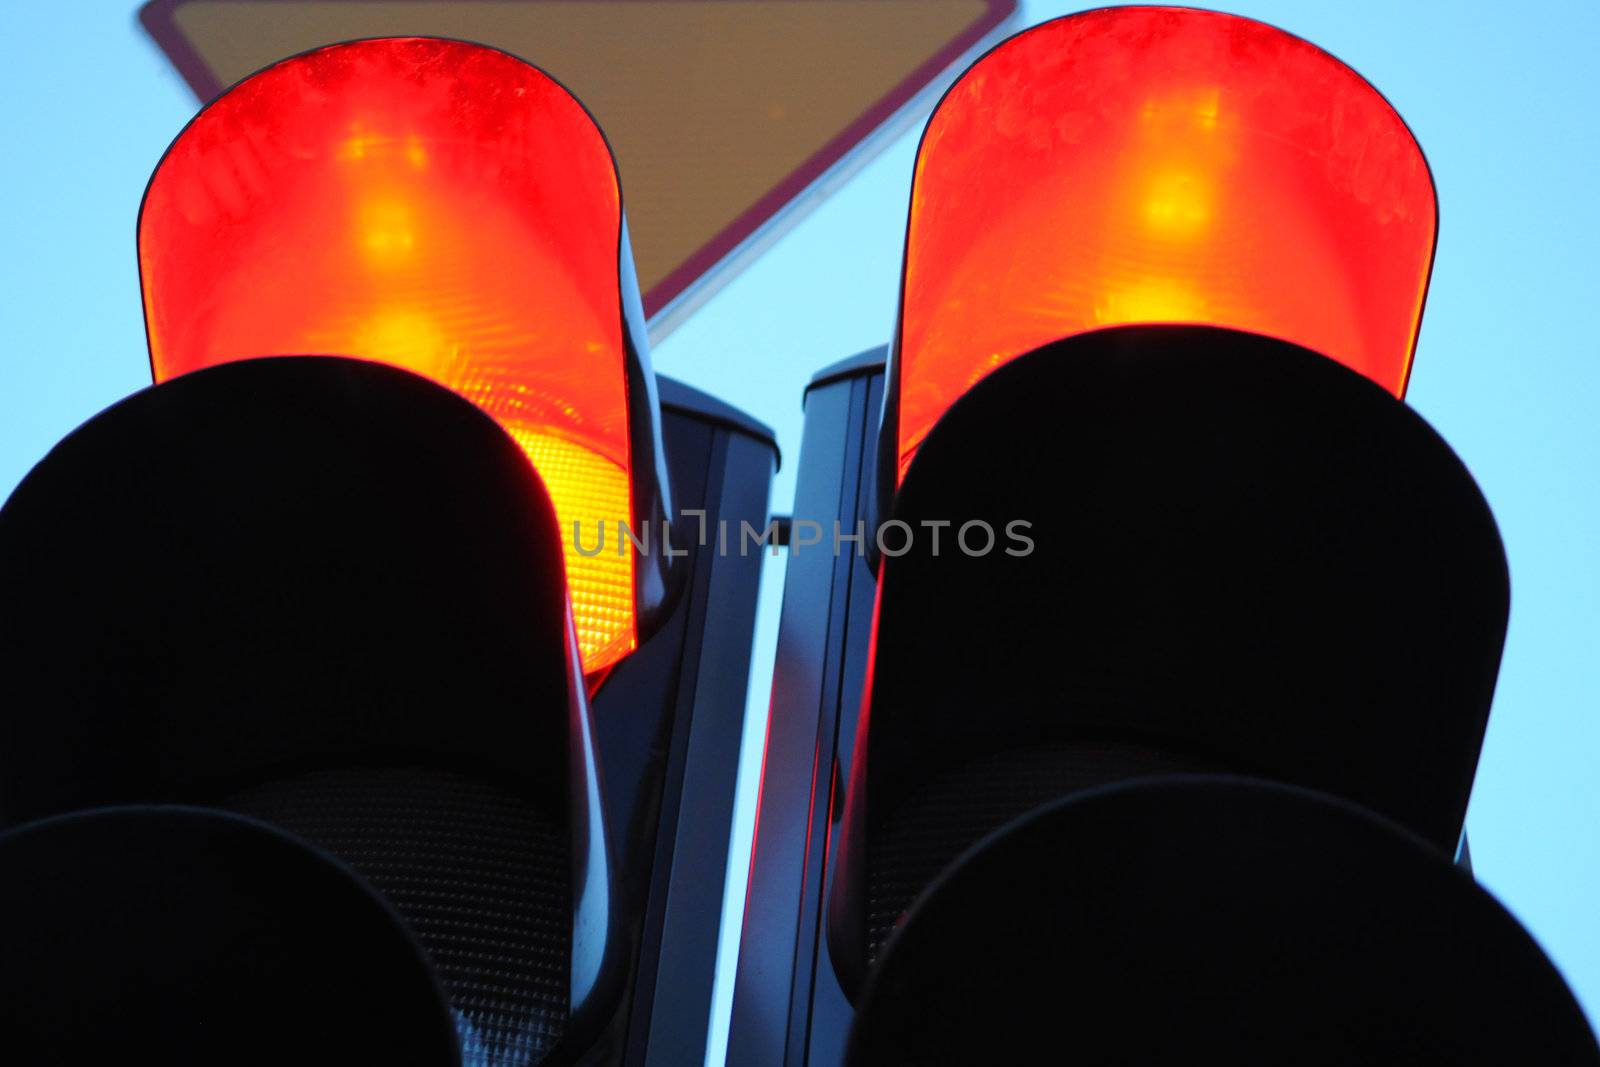 Traffic lights by Yaurinko